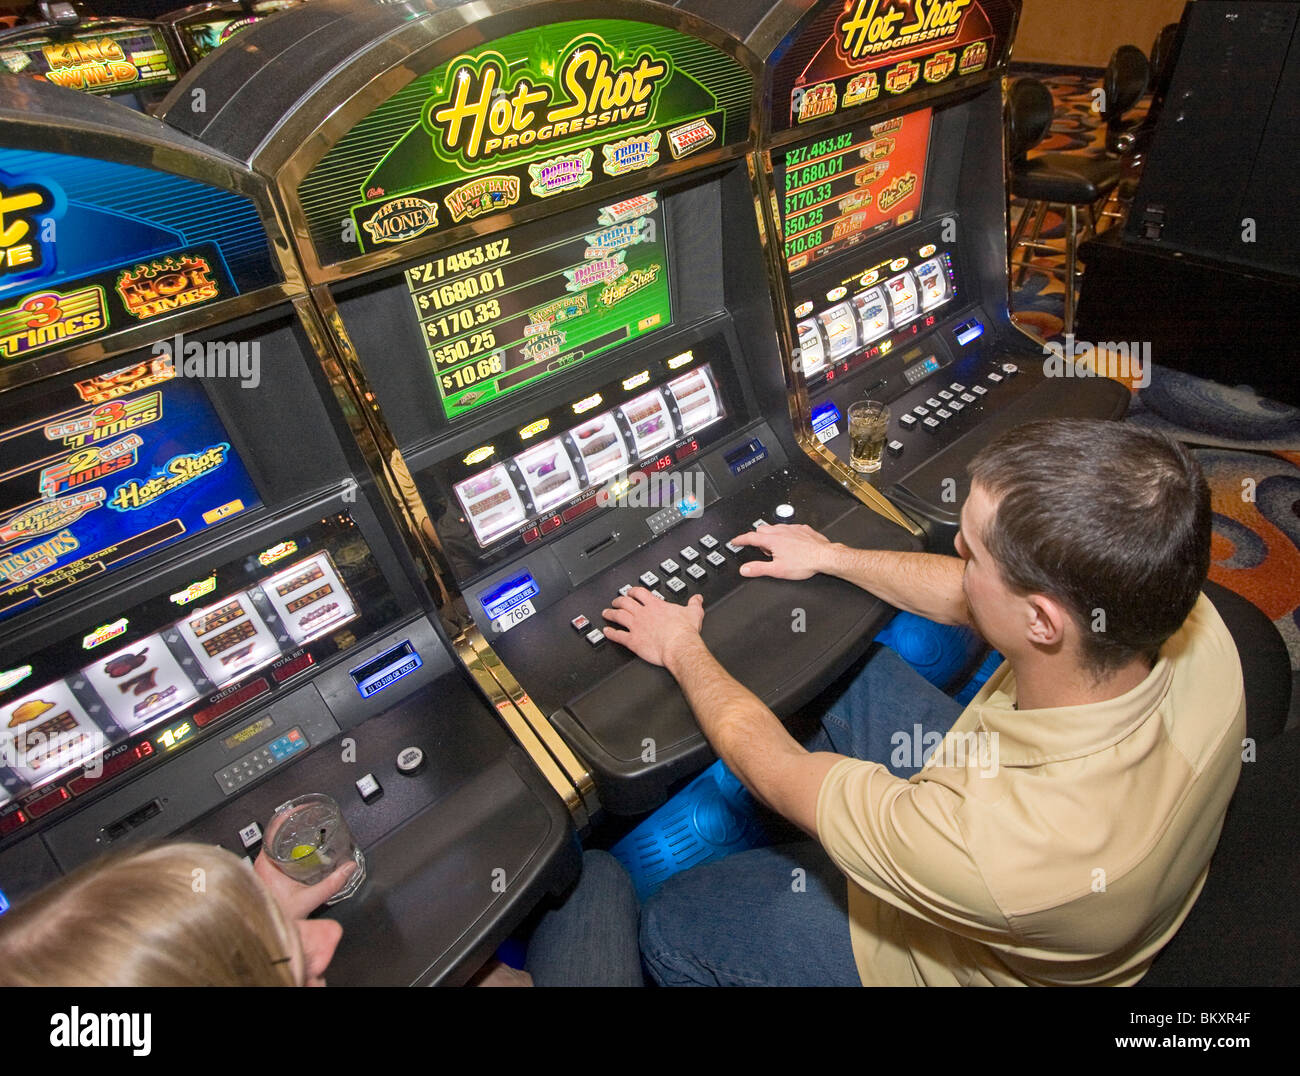 Scene on gaming floor of casino. Man and woman at slot machines in gambling resort, South Lake Tahoe, Nevada, USA. Stock Photo